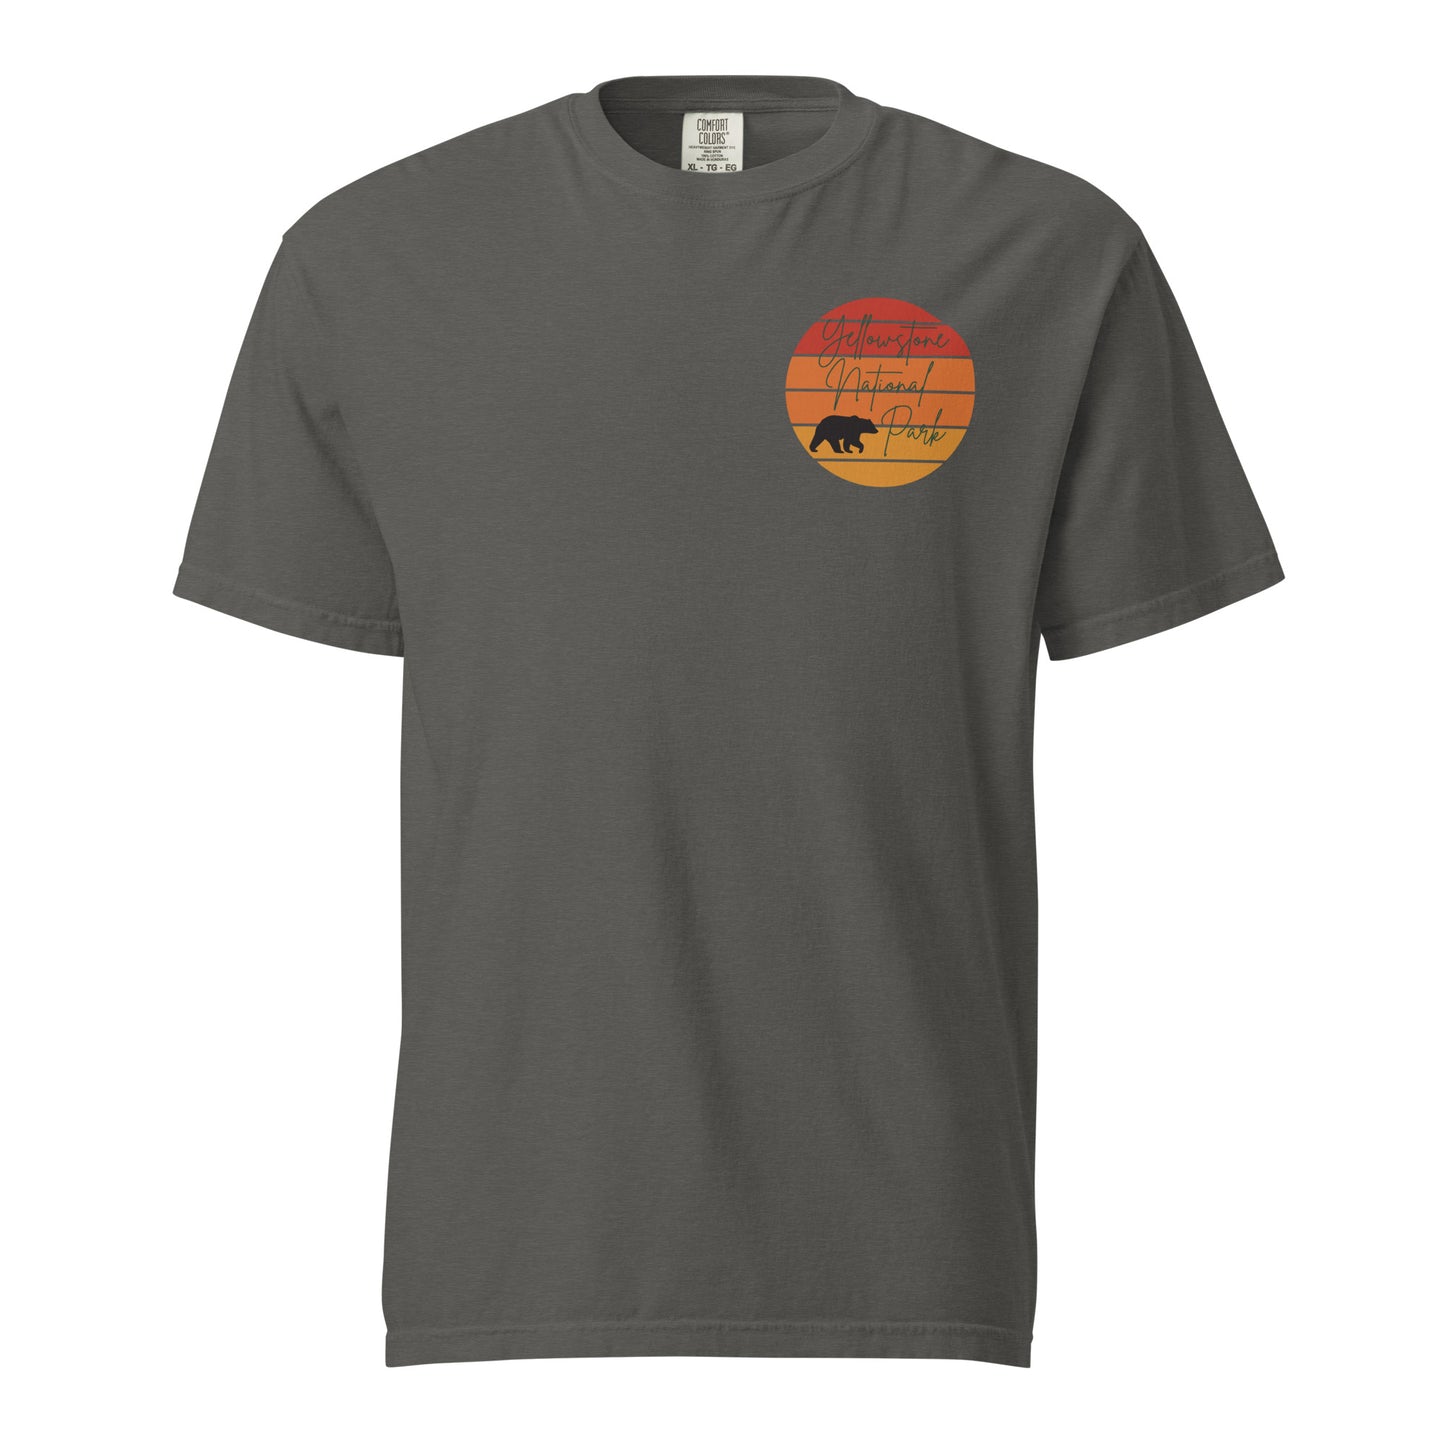 Explore Yellowstone Like a Local Unisex garment-dyed heavyweight t-shirt